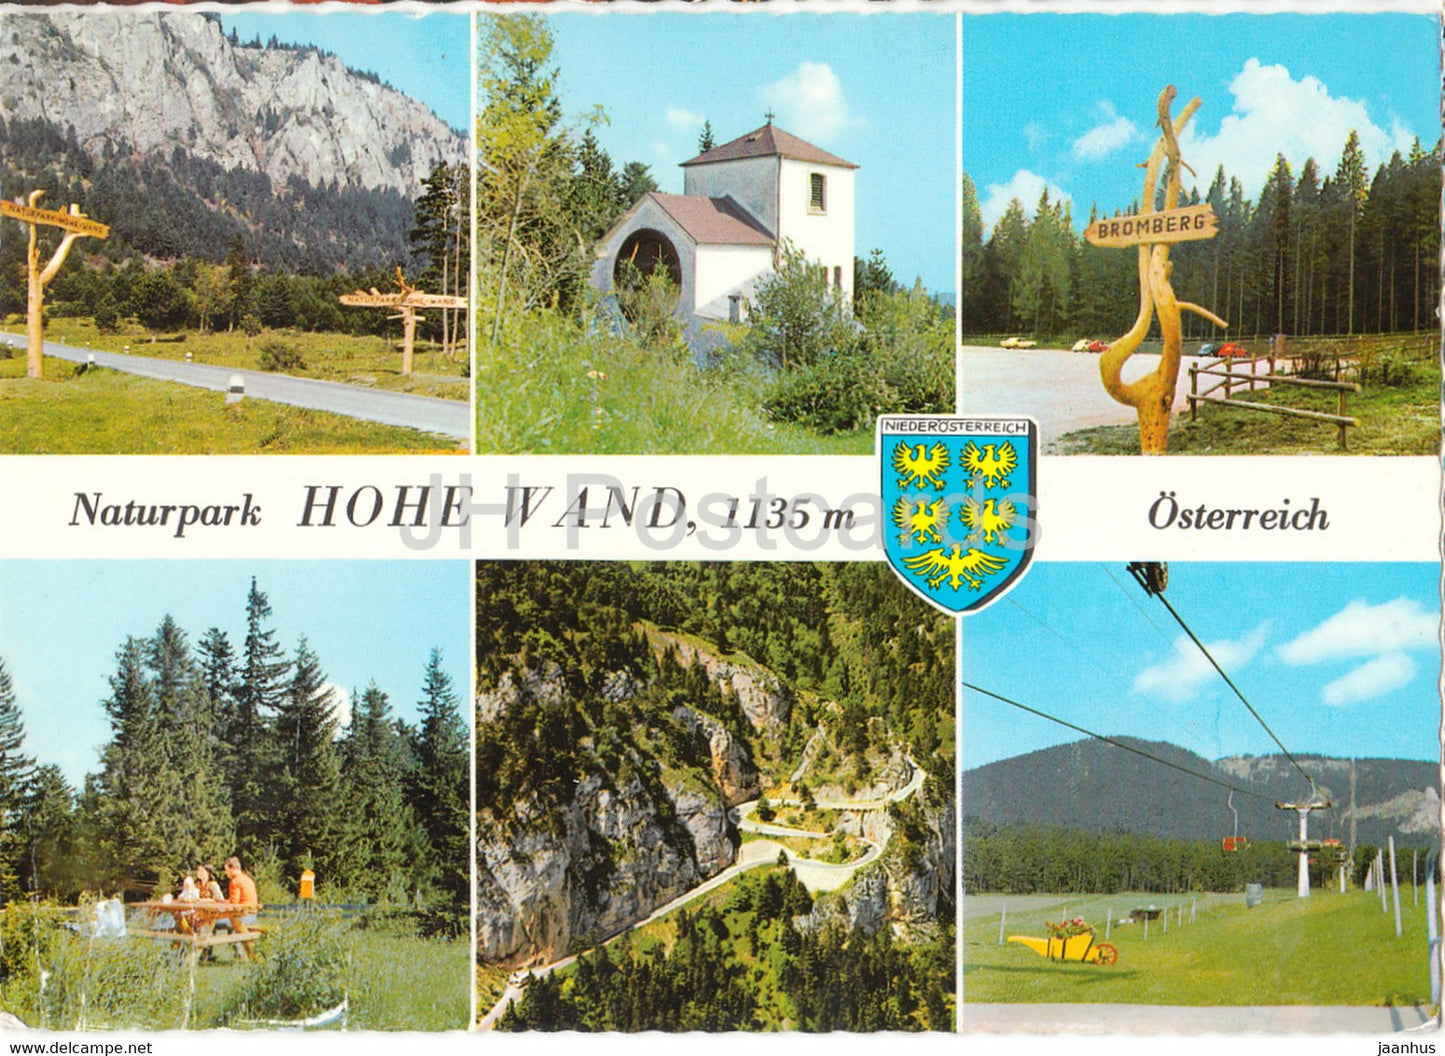 Naturpark Hohe Wand 1135 m - Wegweiser - Engelbert Dollfuss Kirche - Sessellift - multiview - 1976 - Austria - used - JH Postcards